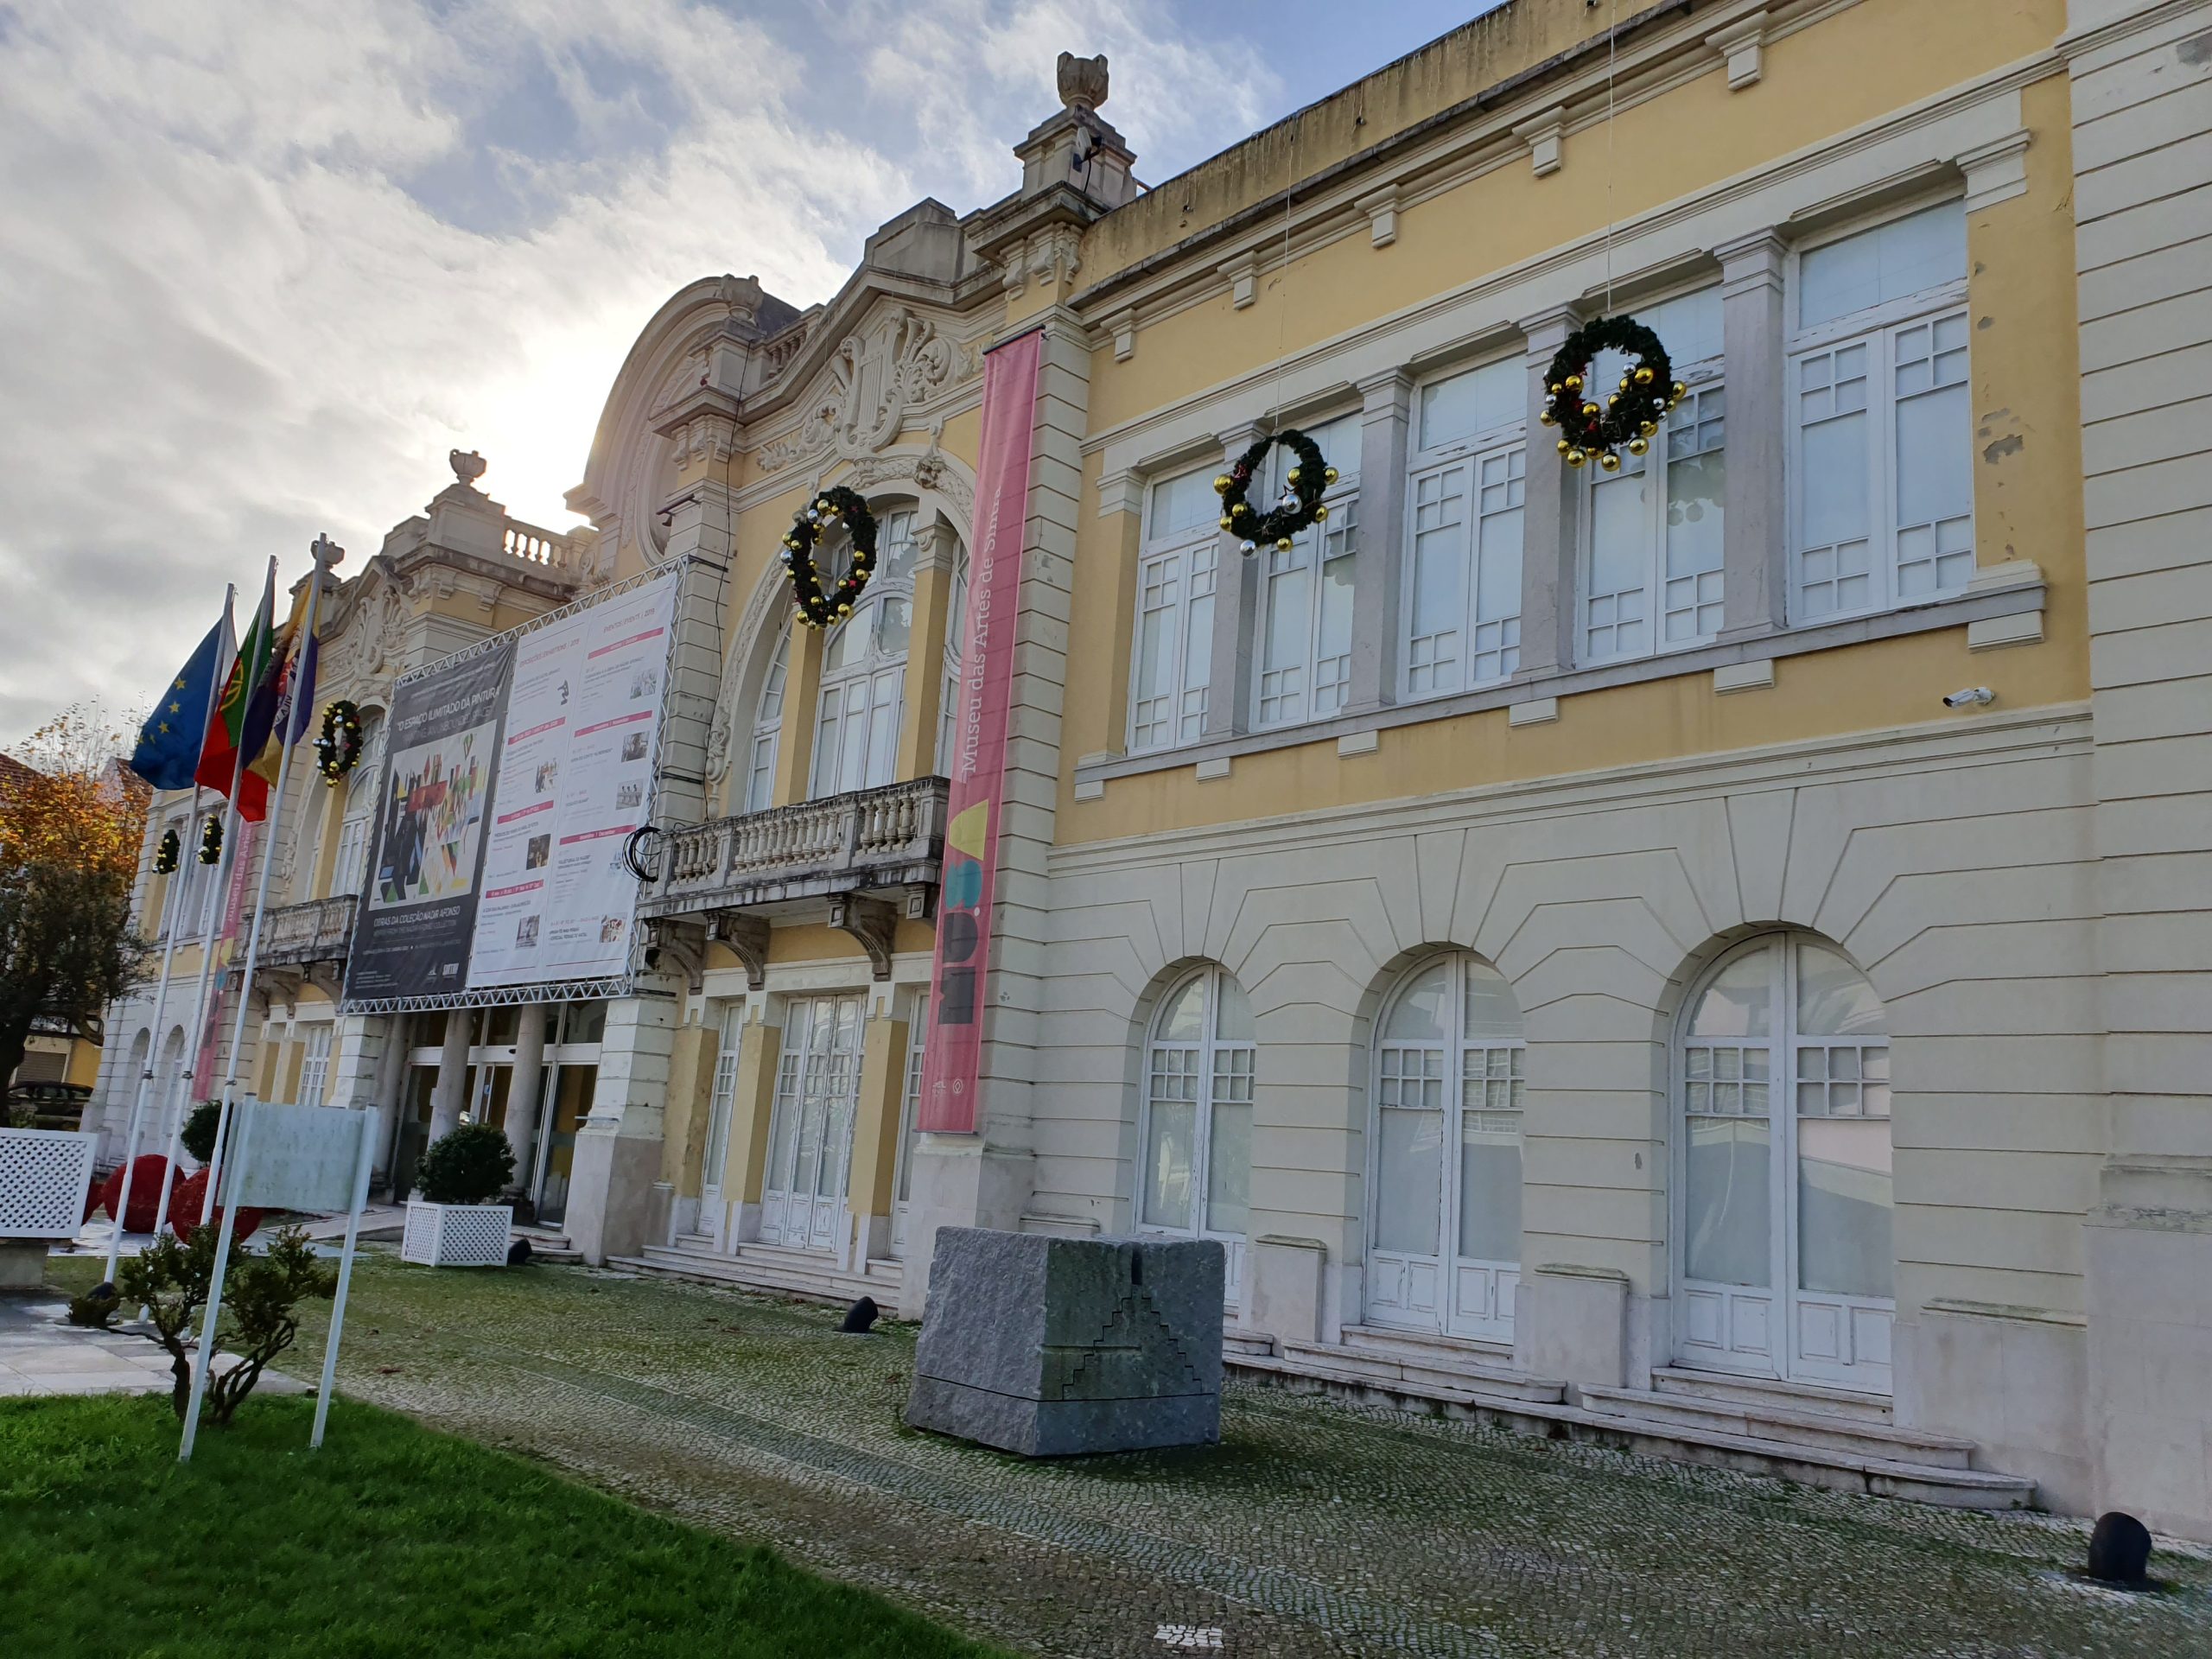 Sintra Museum